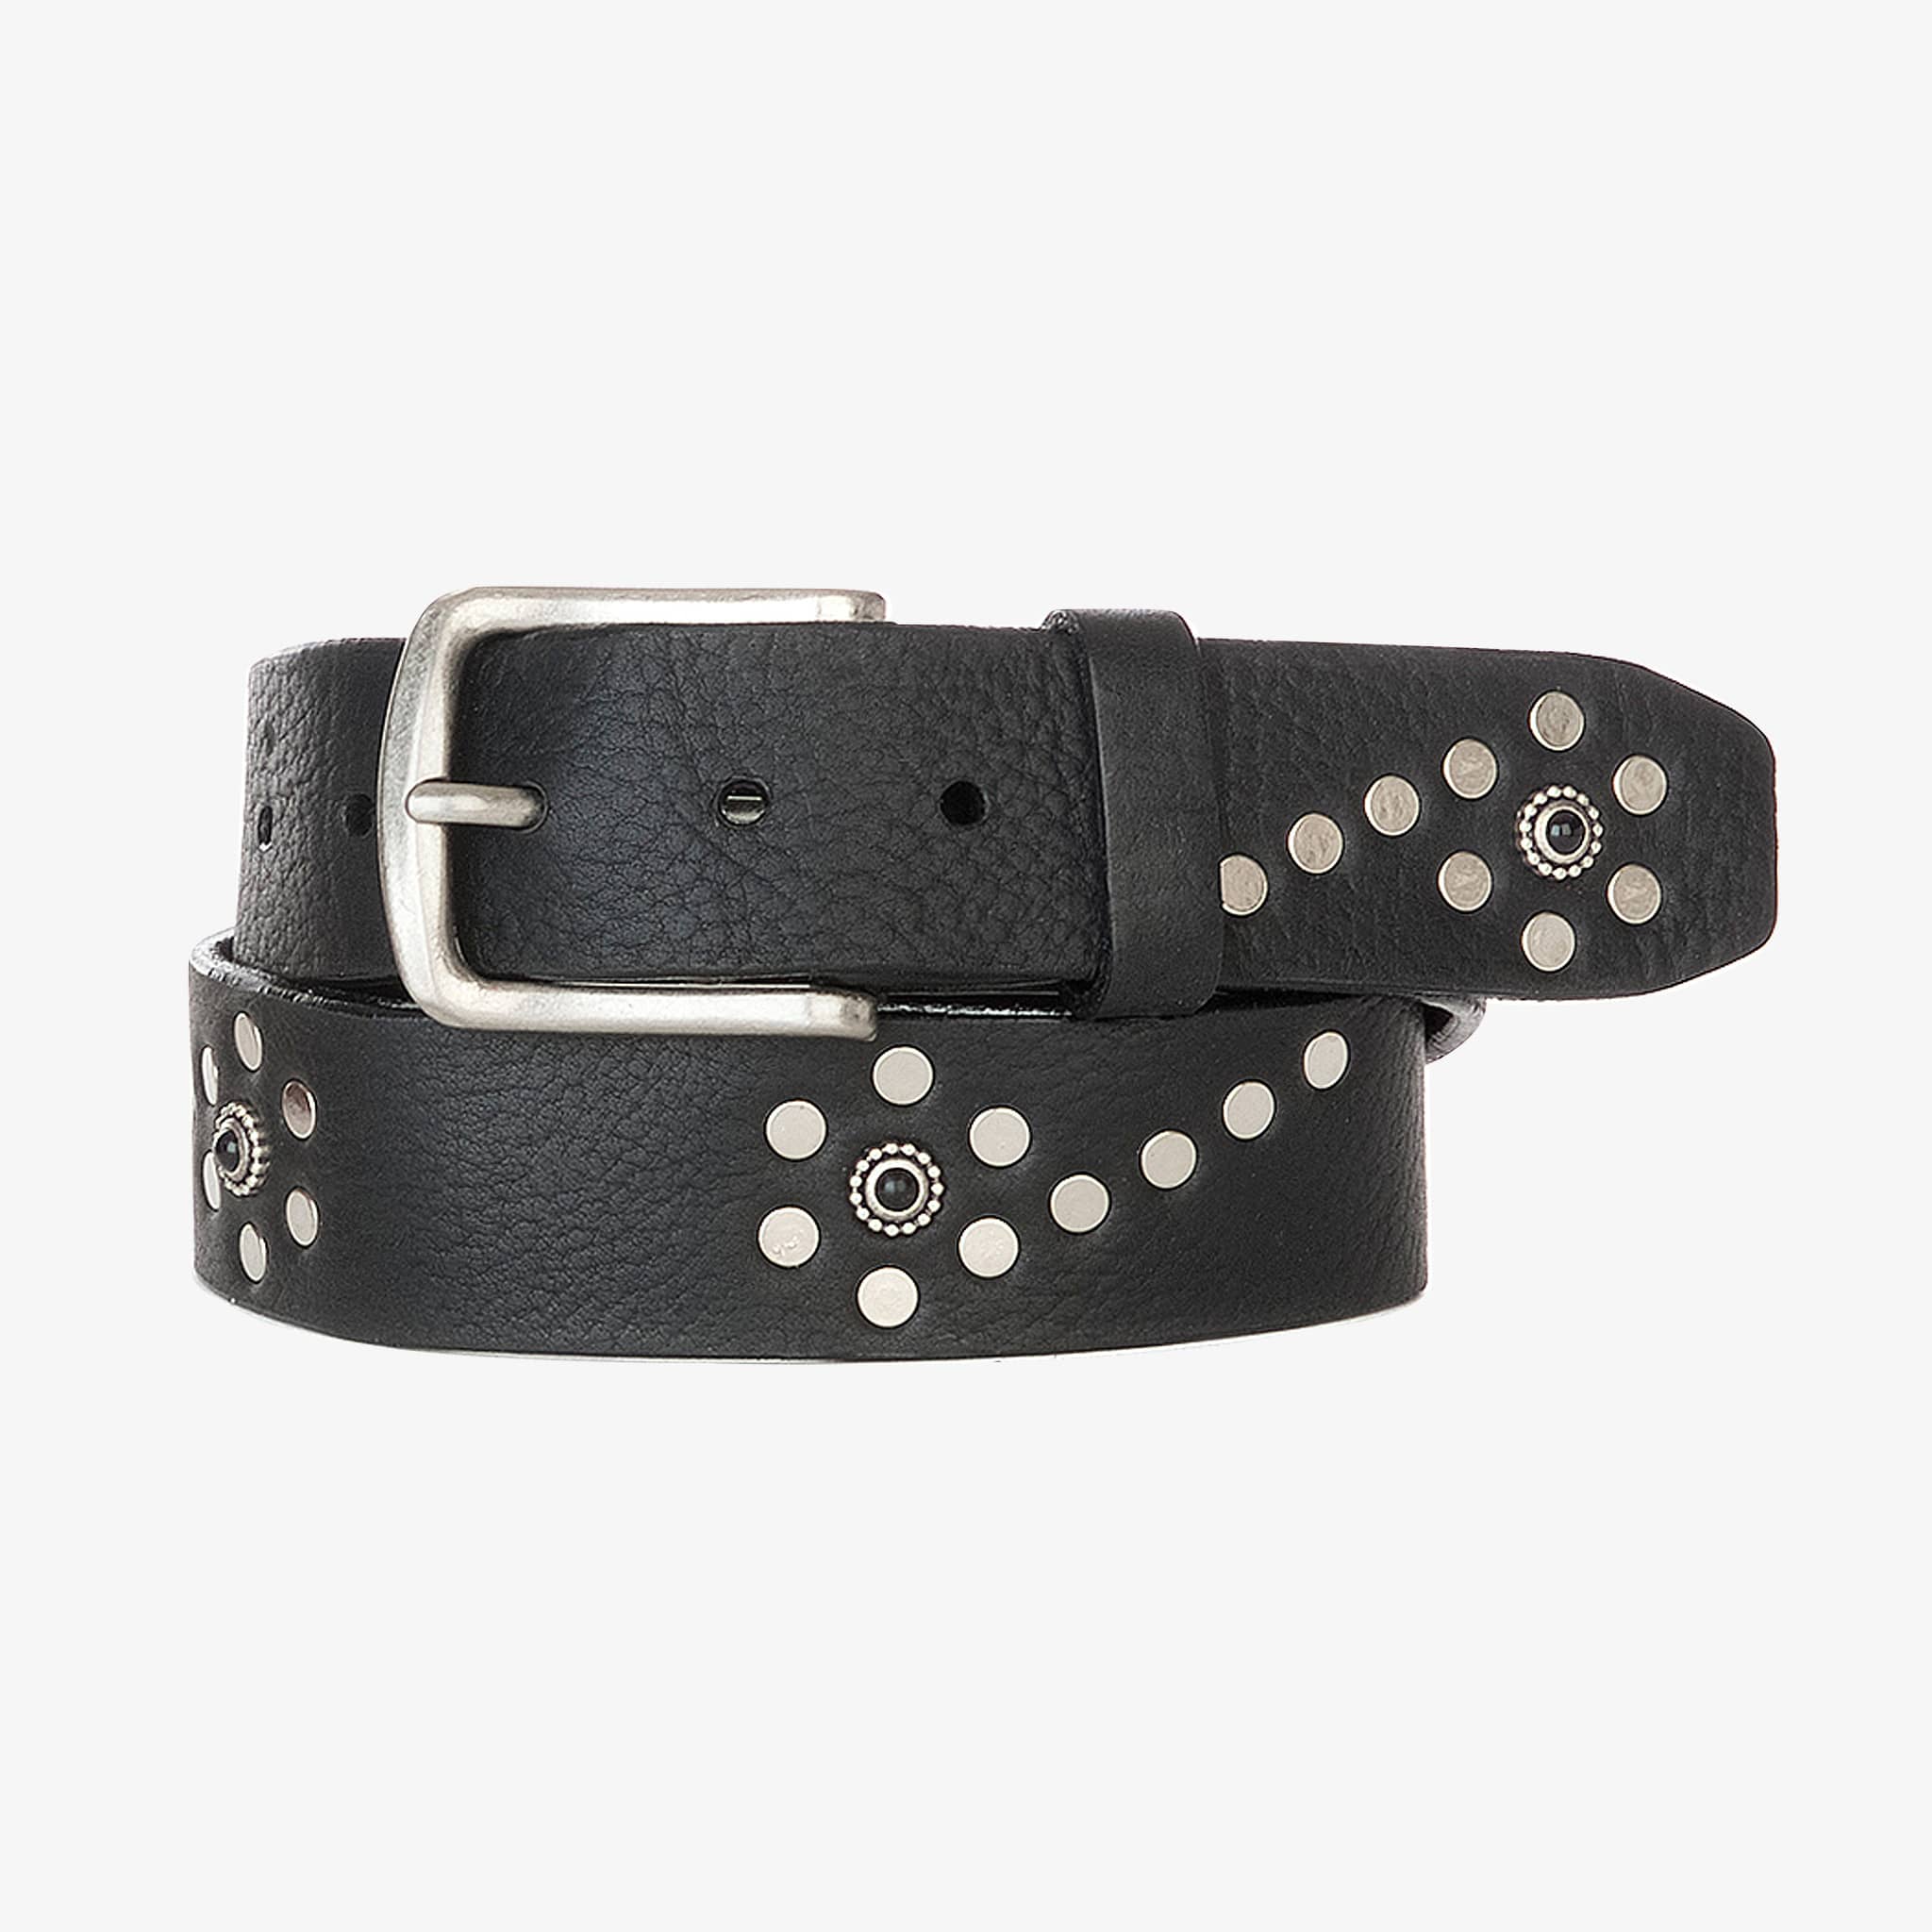 Velez Sasquatch BRAVE Leather Belt -- Custom Made for You